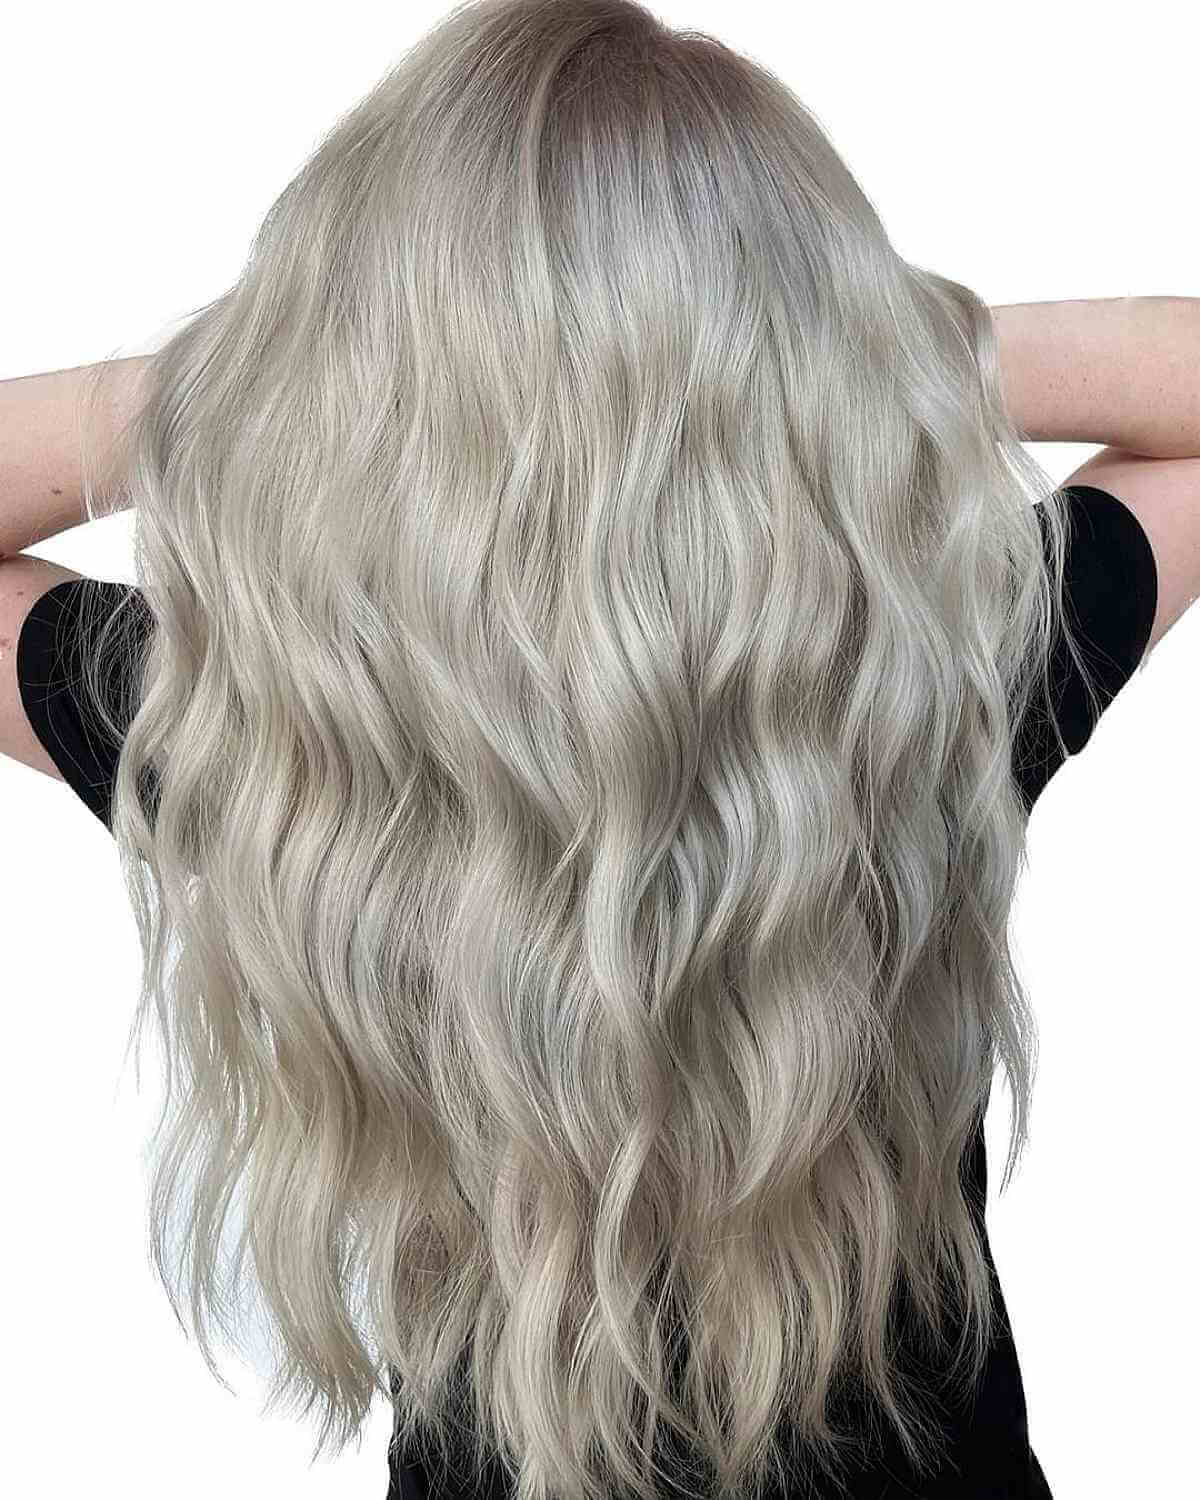 Icy platinum blonde hair colors